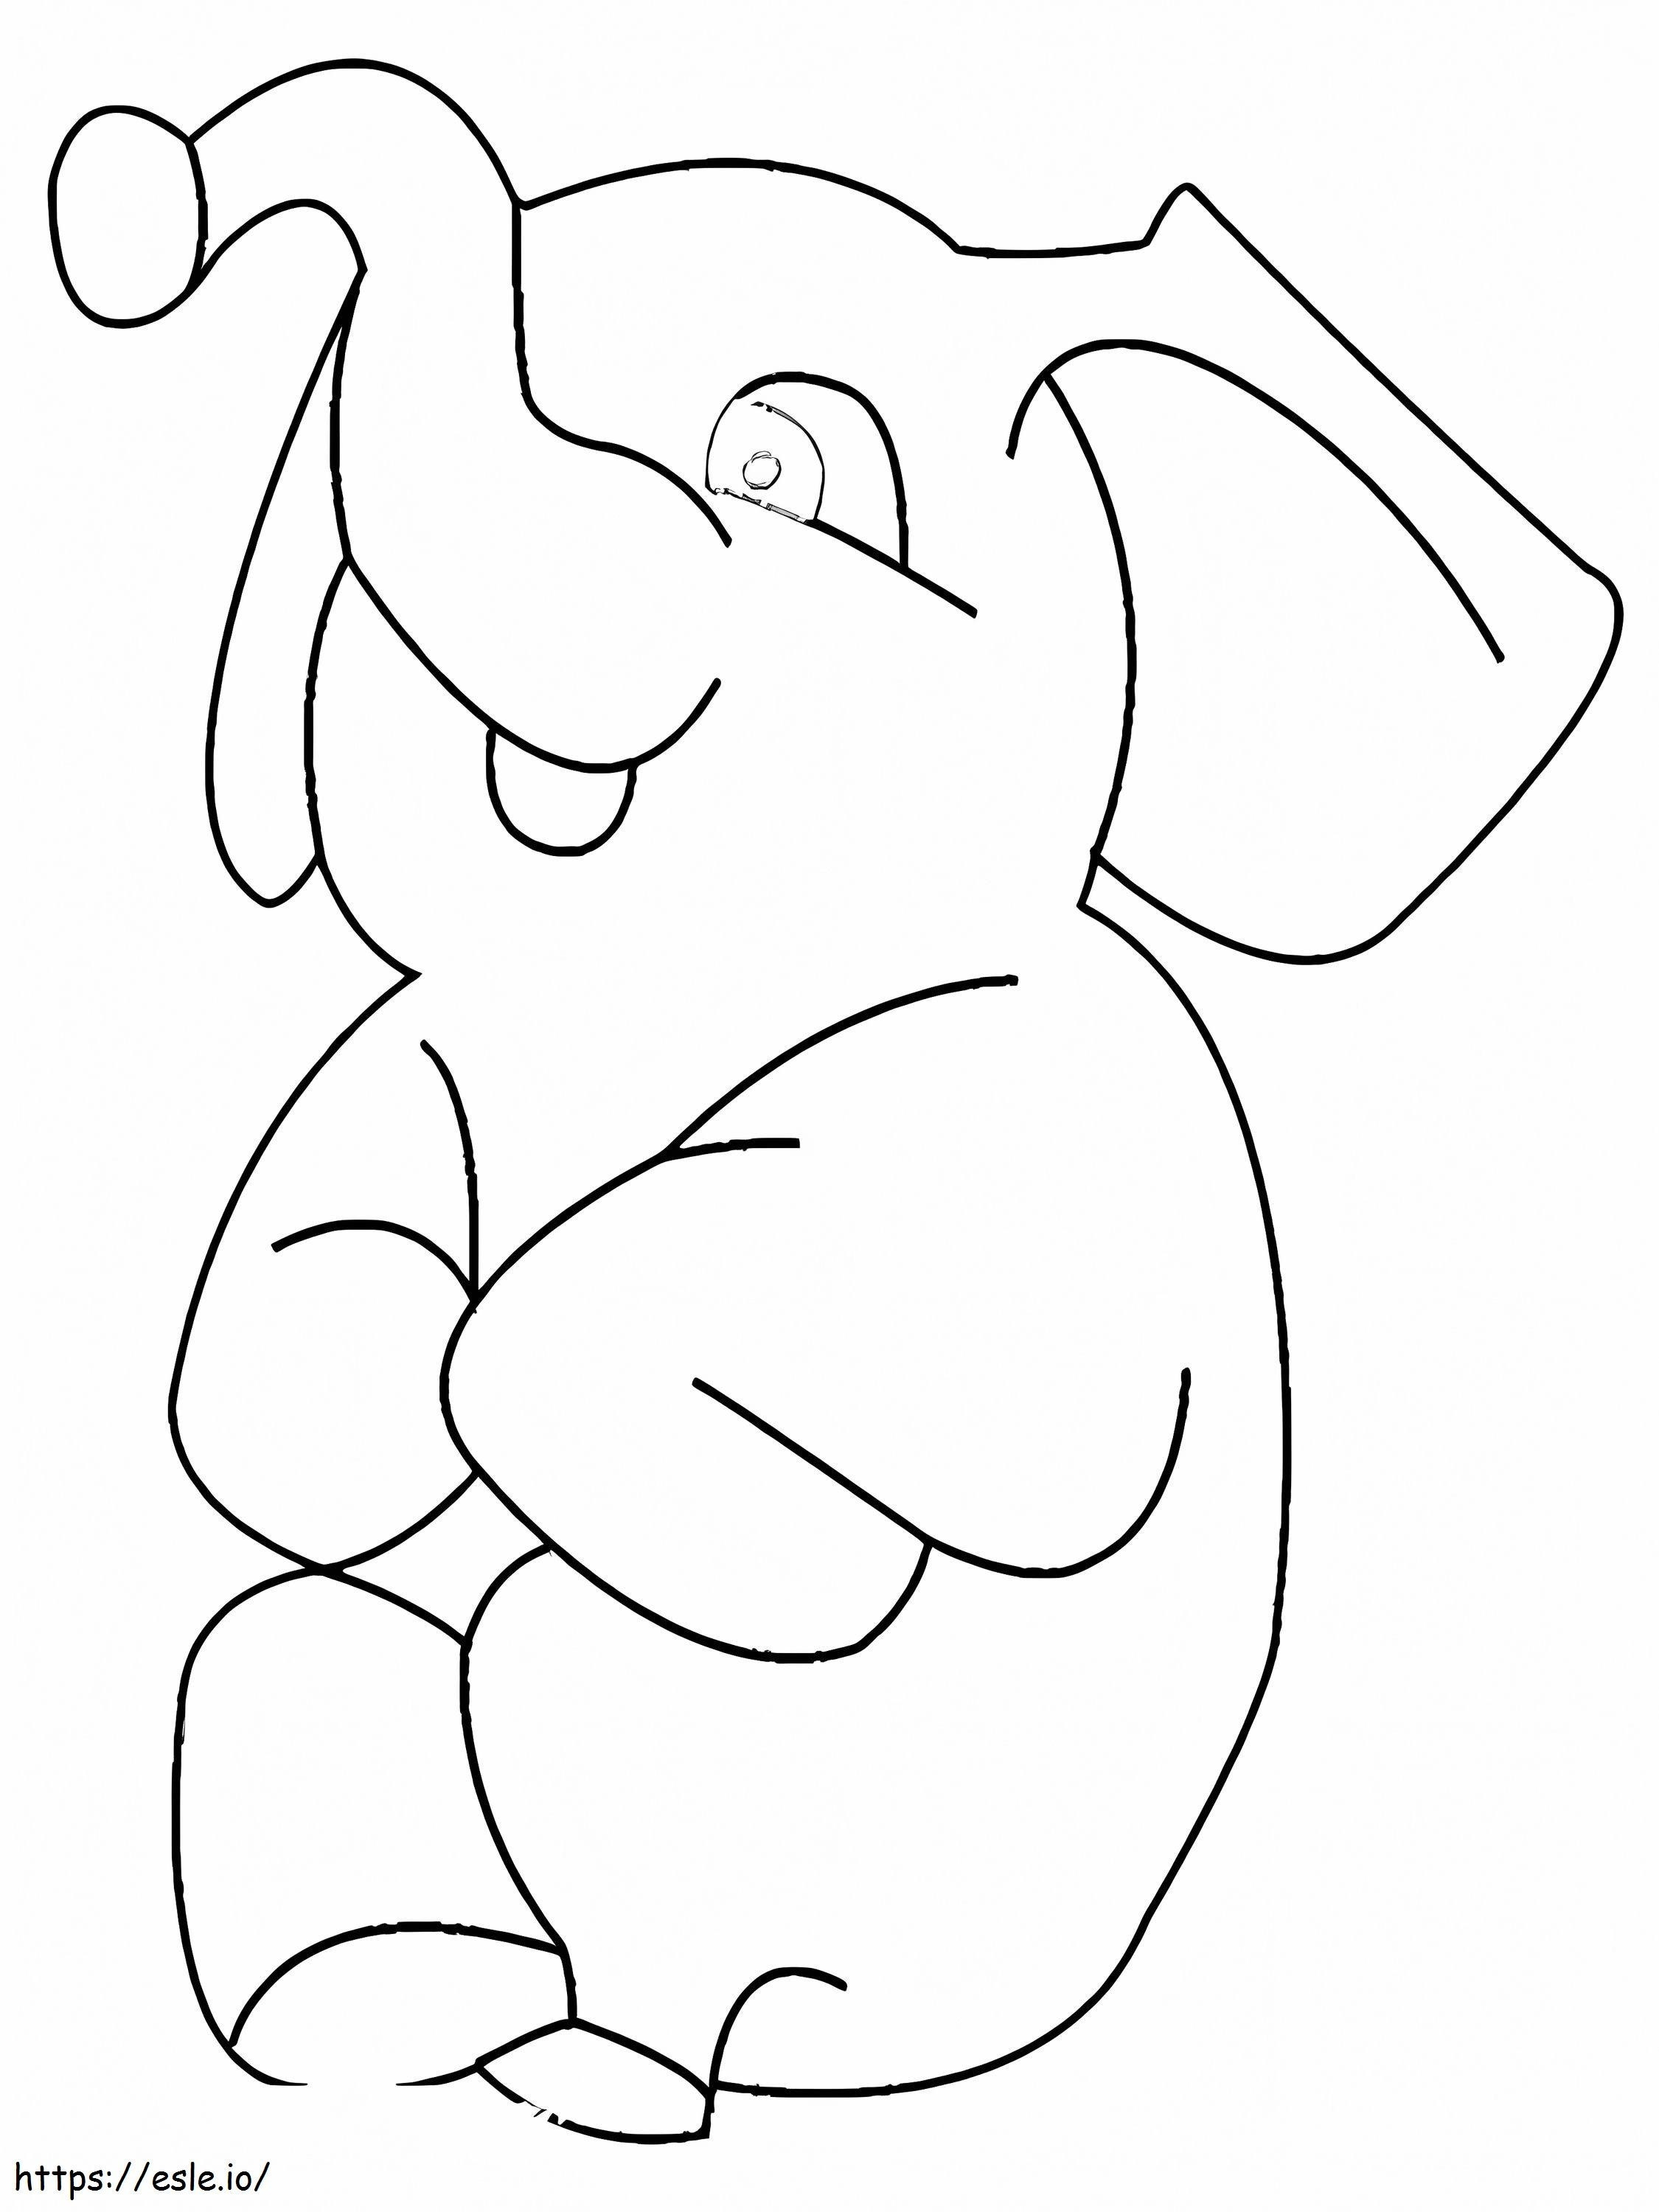 Cartoon-Elefant ausmalbilder